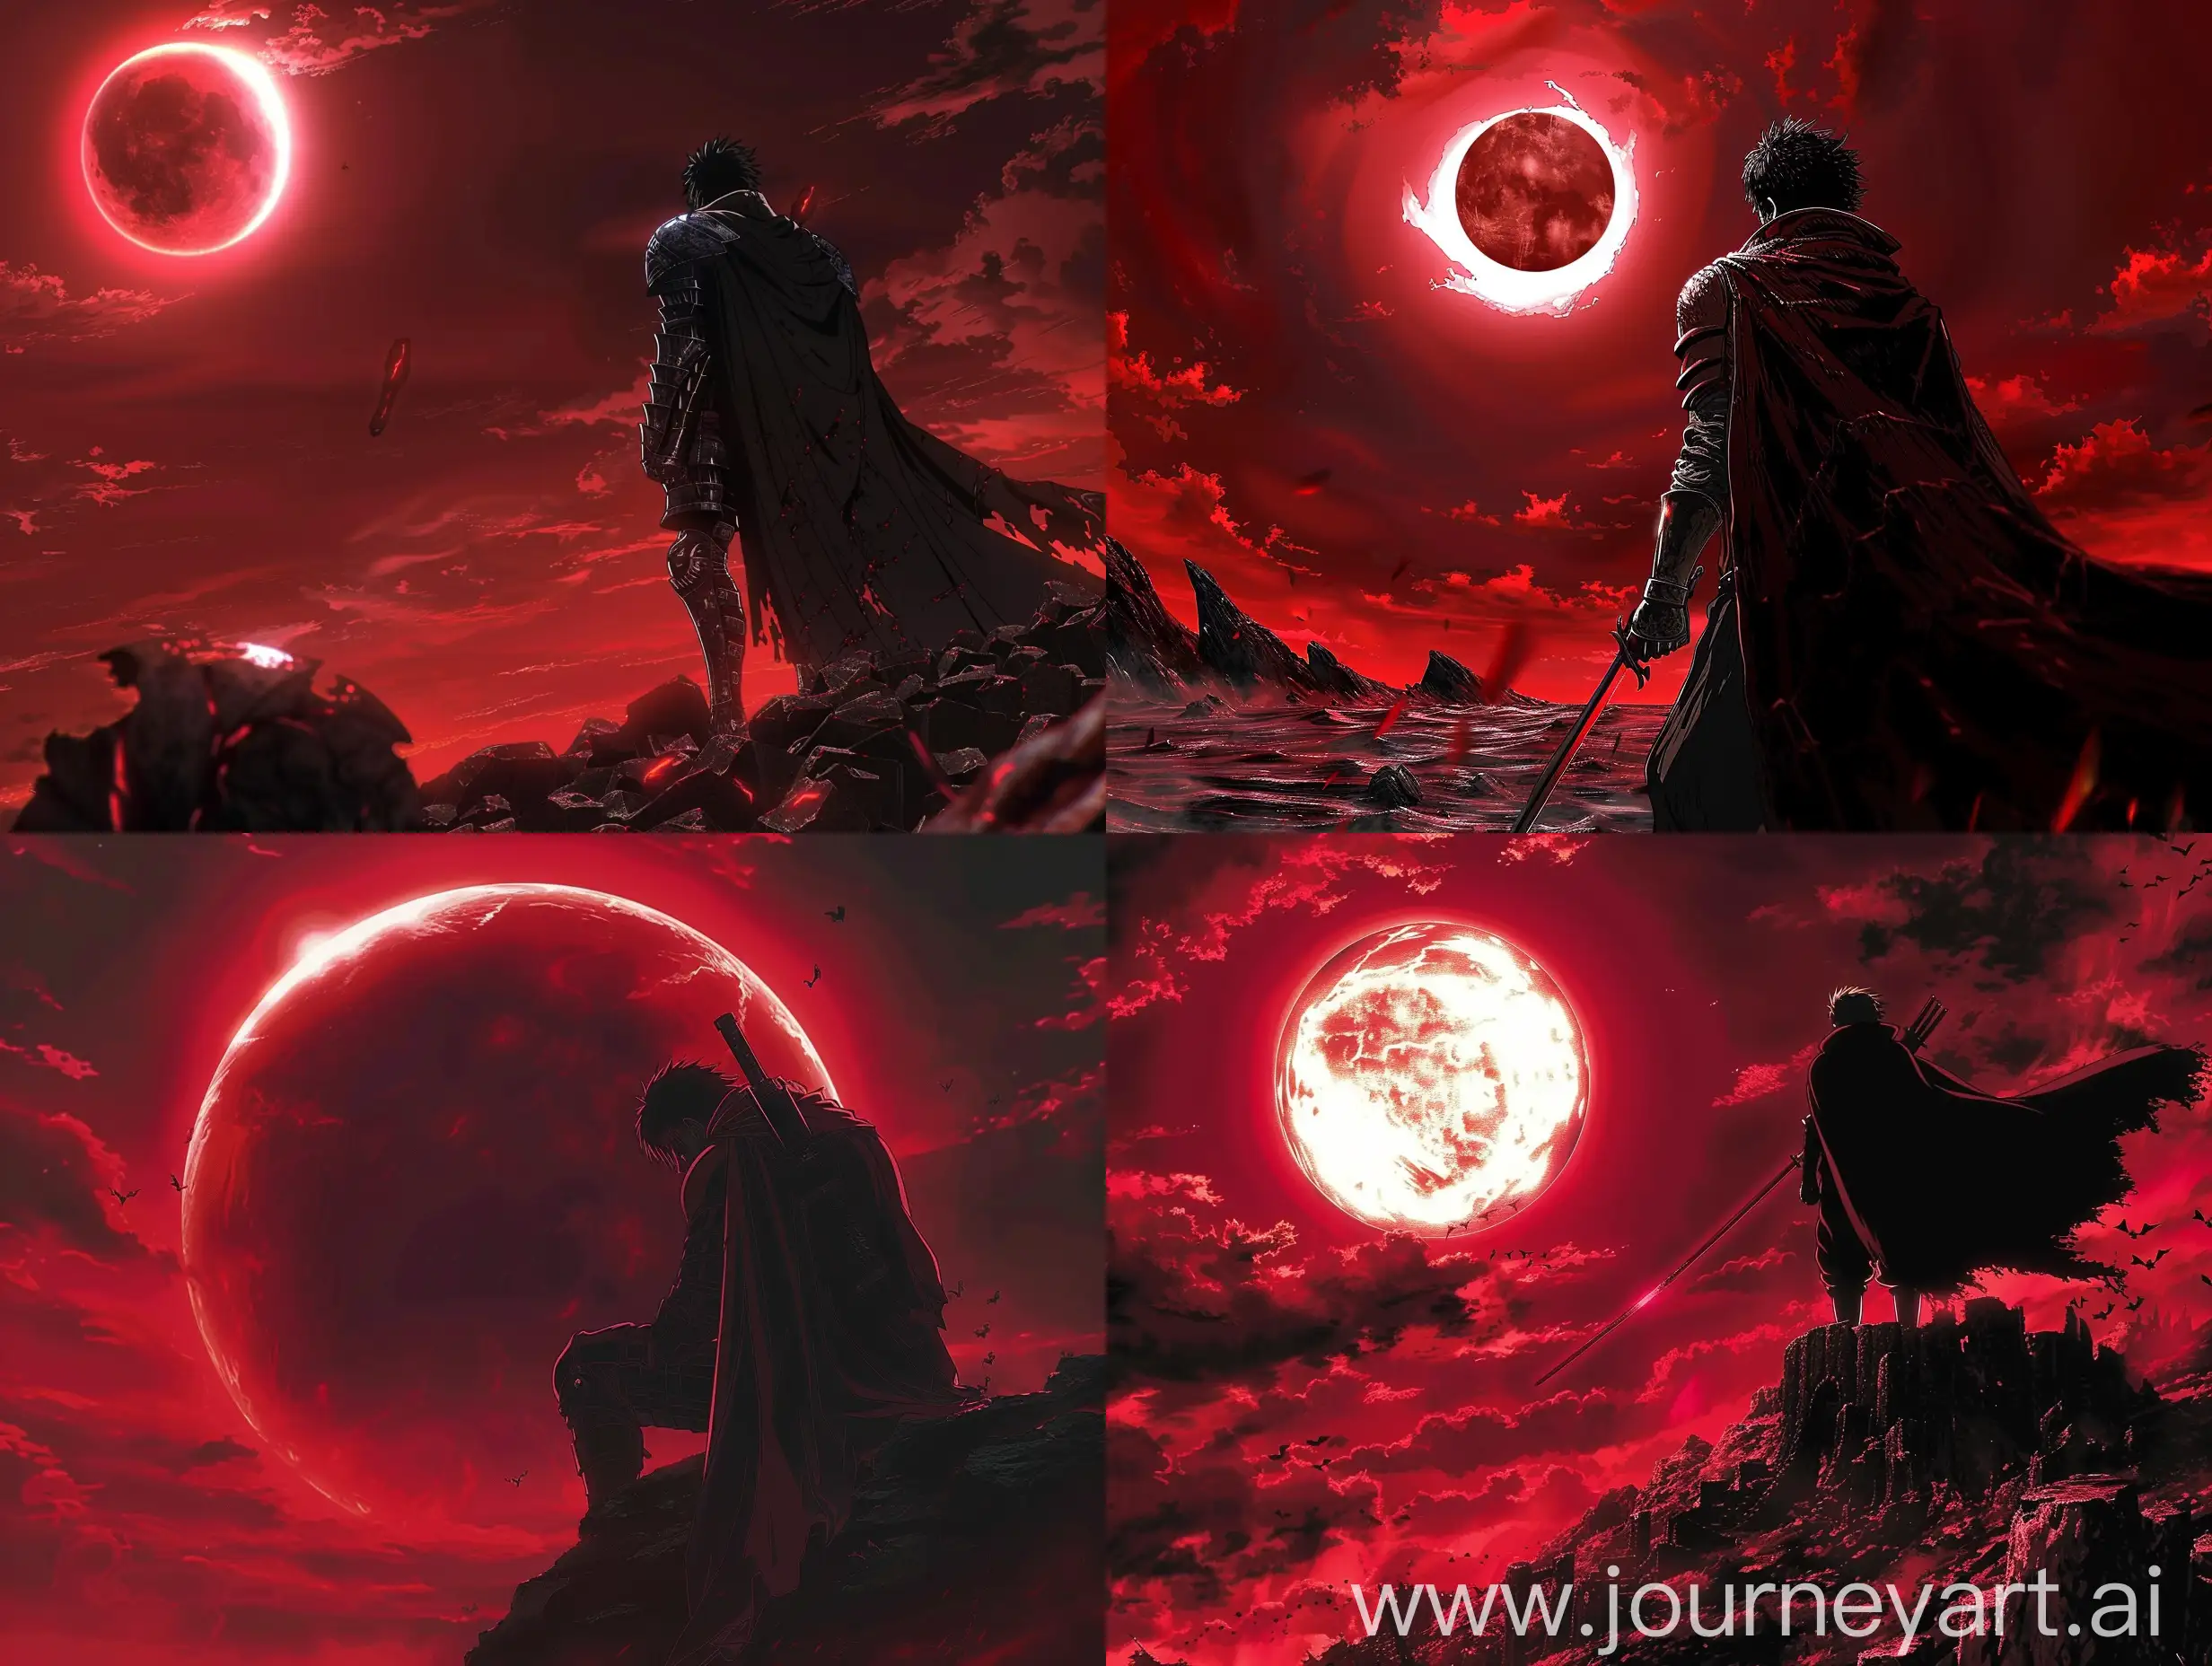 Intense-Anime-Manga-Scene-Berserk-Eclipse-in-Vibrant-Red-Colors